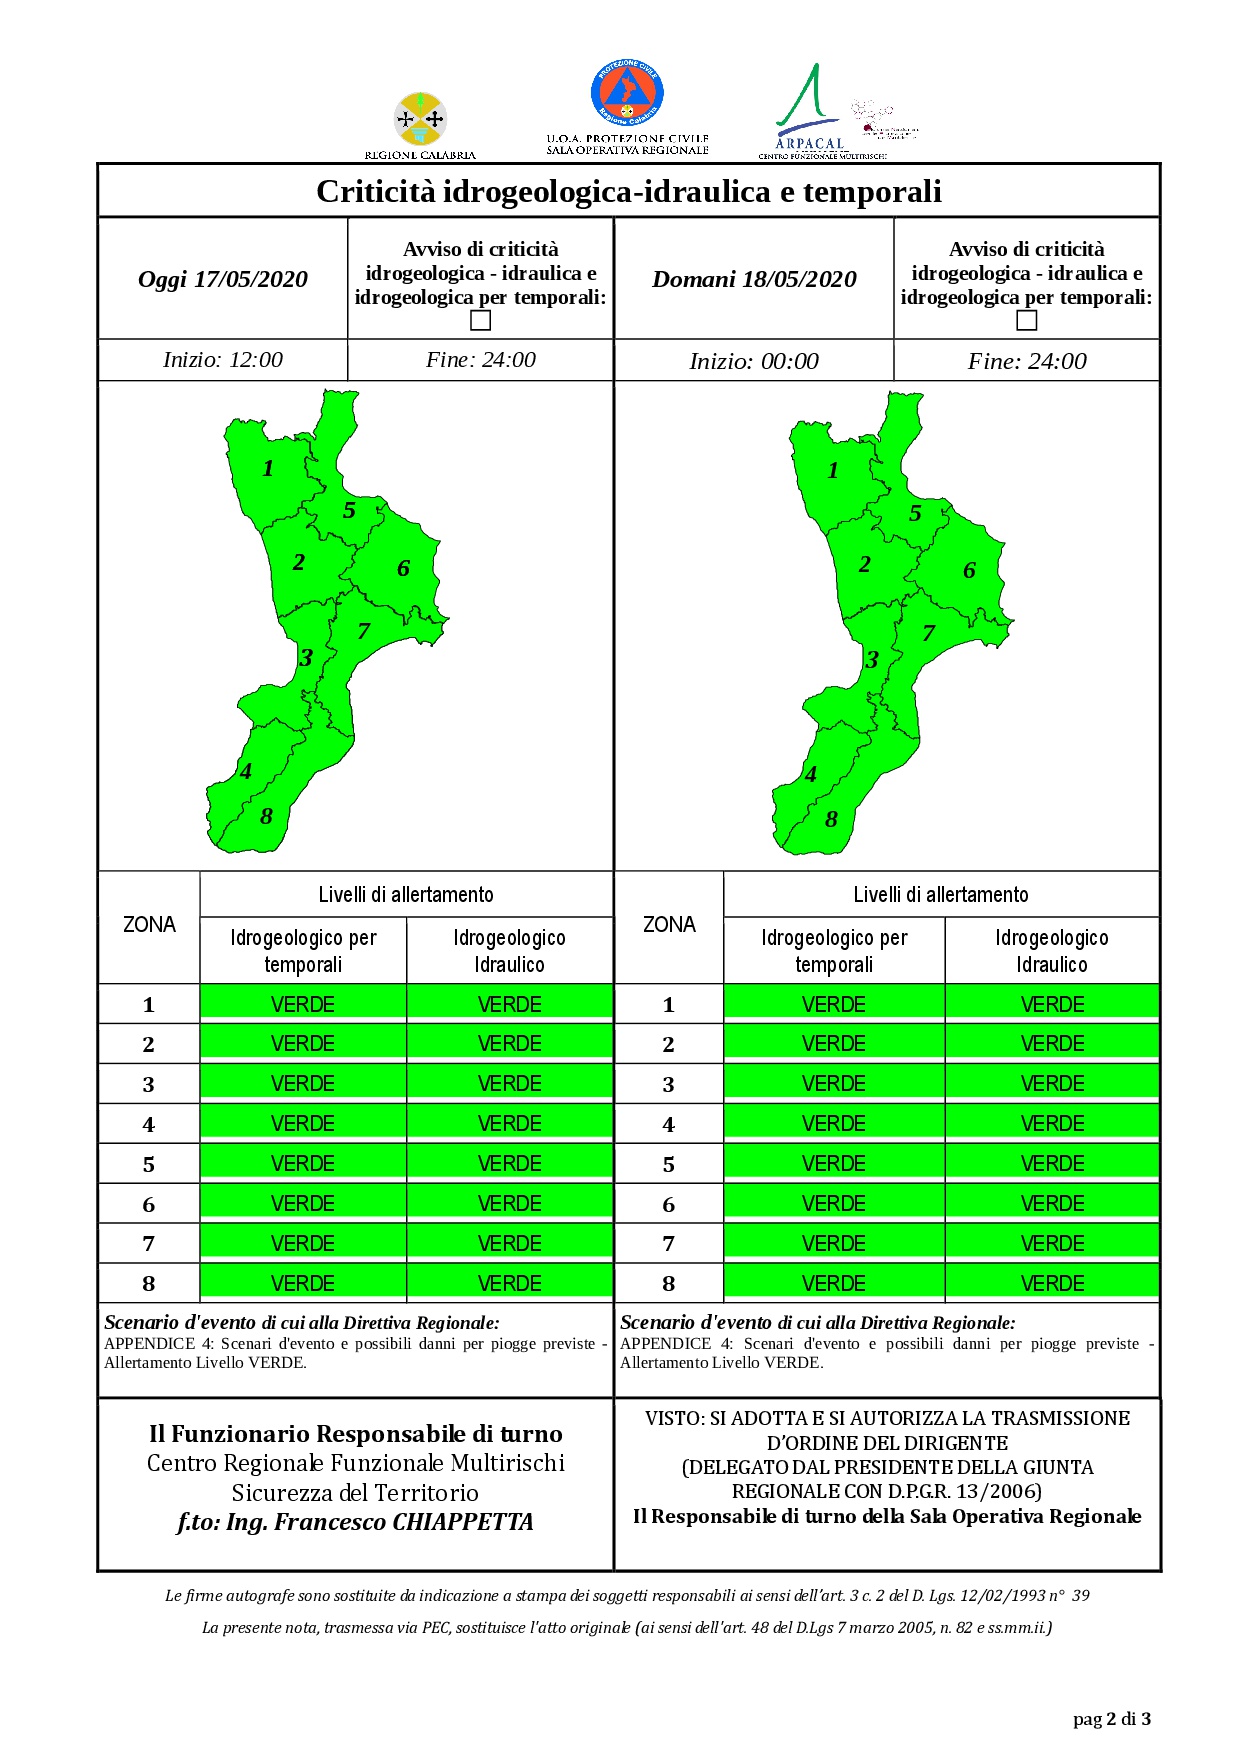 Criticità idrogeologica-idraulica e temporali in Calabria 17-05-2020